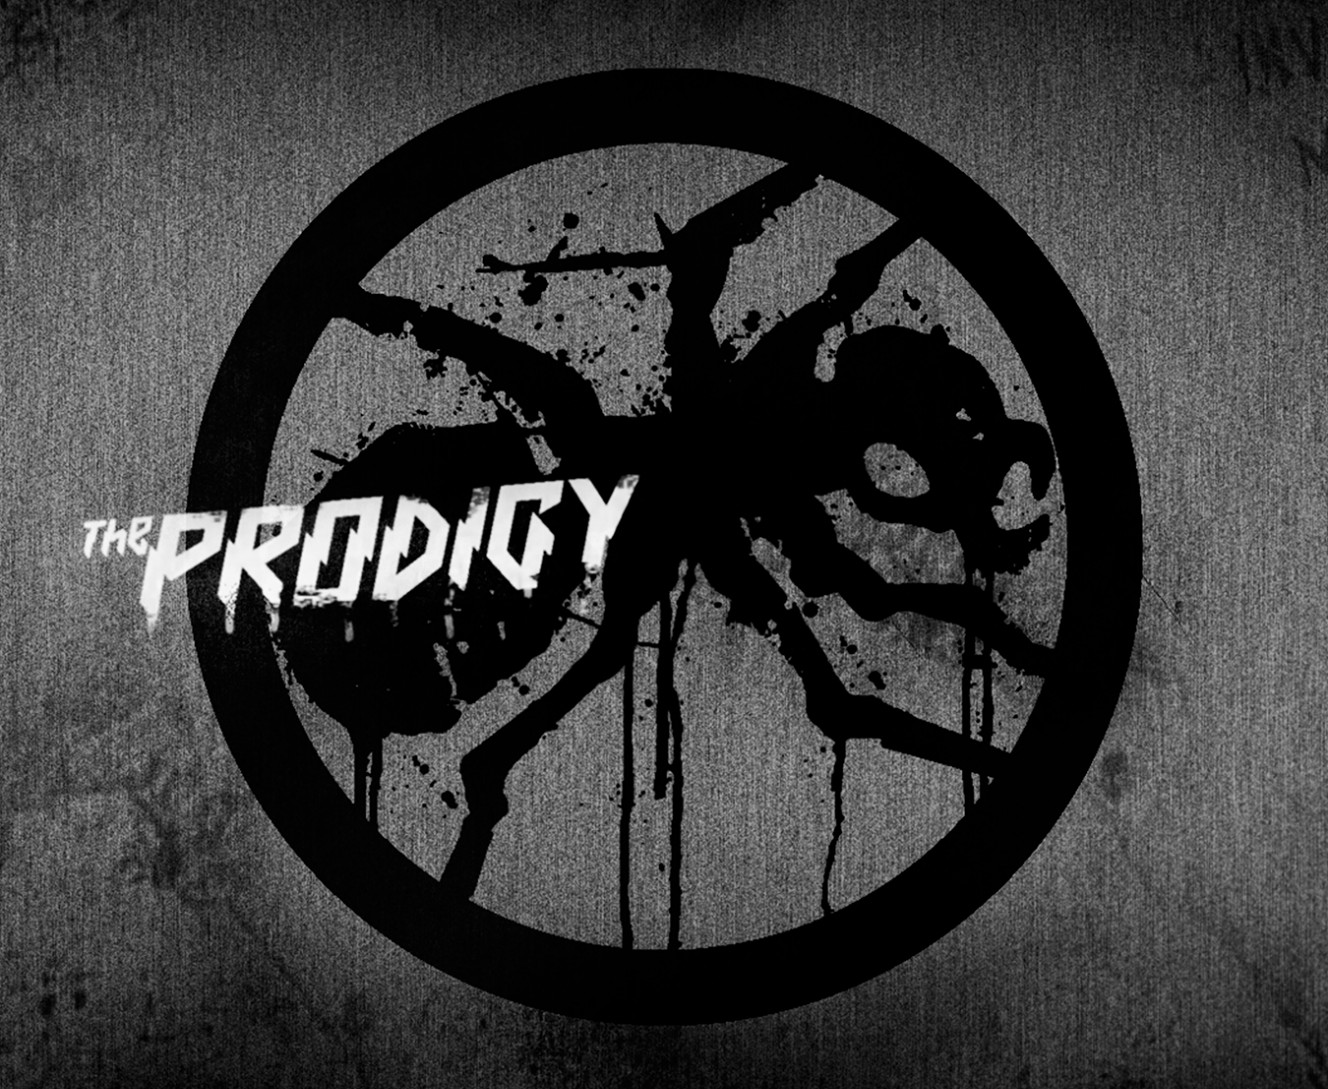 The Prodigy 3